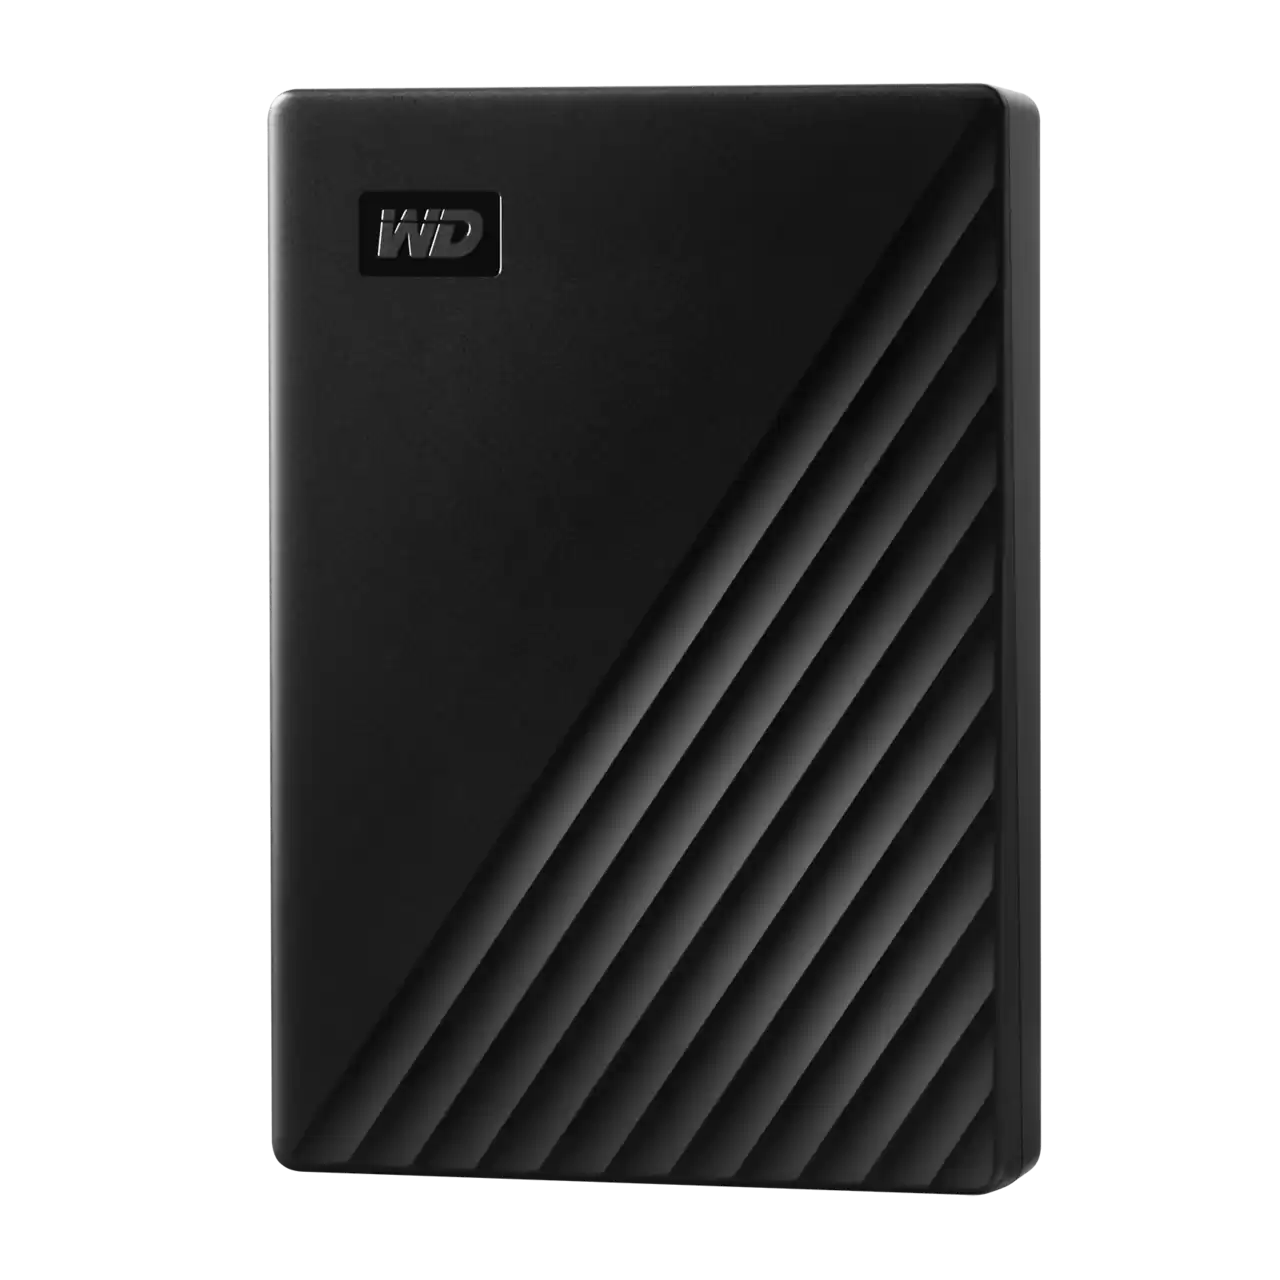 WD My Passport 4TB 2.5" External HDD - Black (WDBPKJ0040BBK)